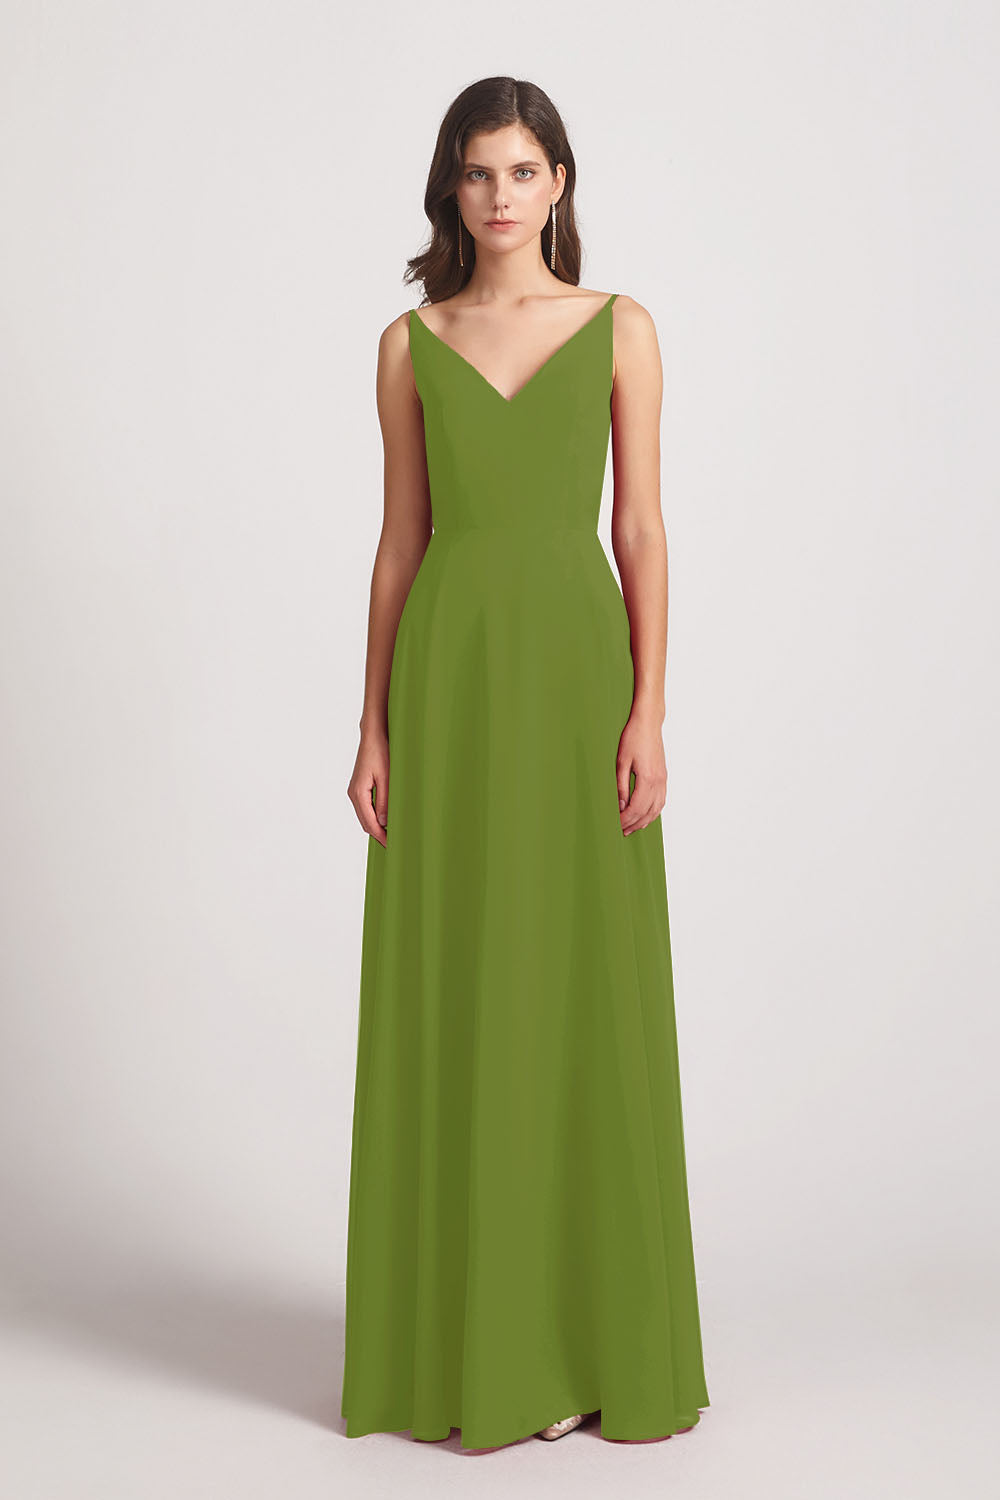 Alfa Bridal Olive Green V-Neck Spaghetti Straps Chiffon Bridesmaid Dresses With Back Tie (AF0002)